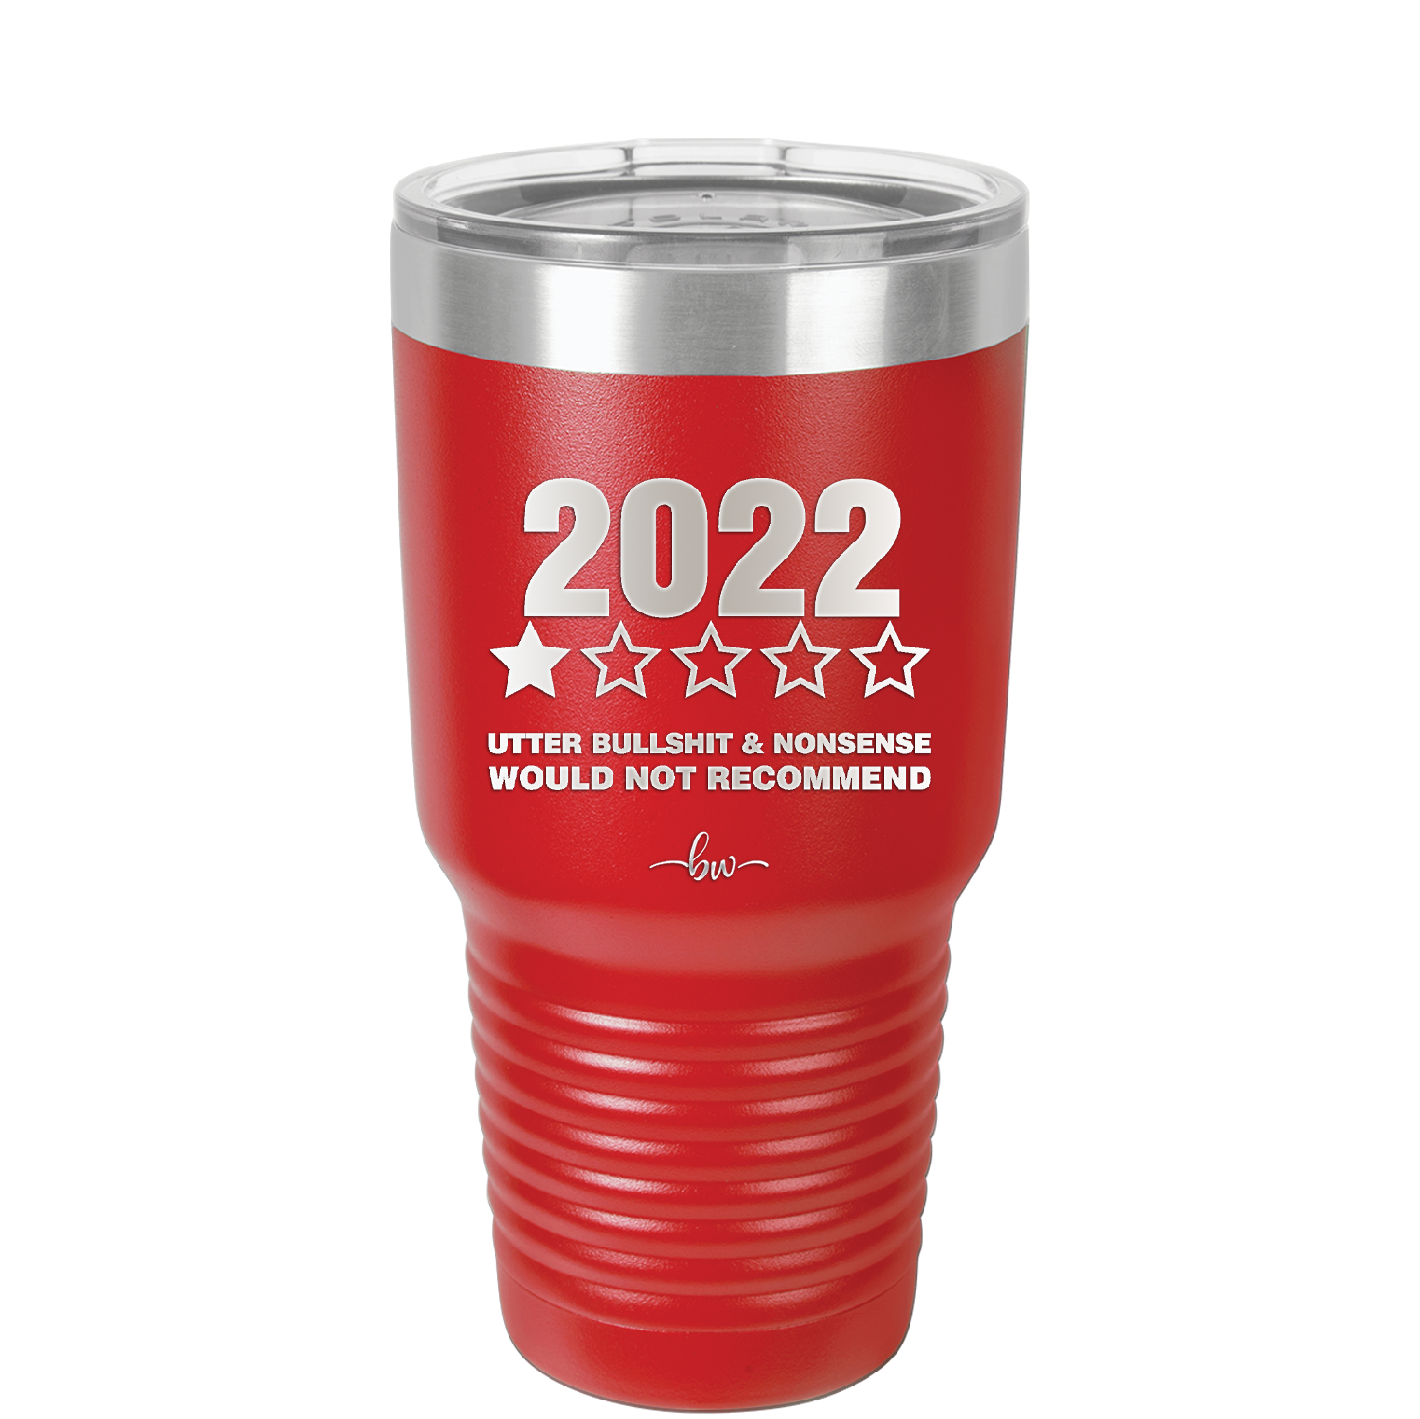 30 oz 2022 utter bullshitt and nonsense would not recommend- red